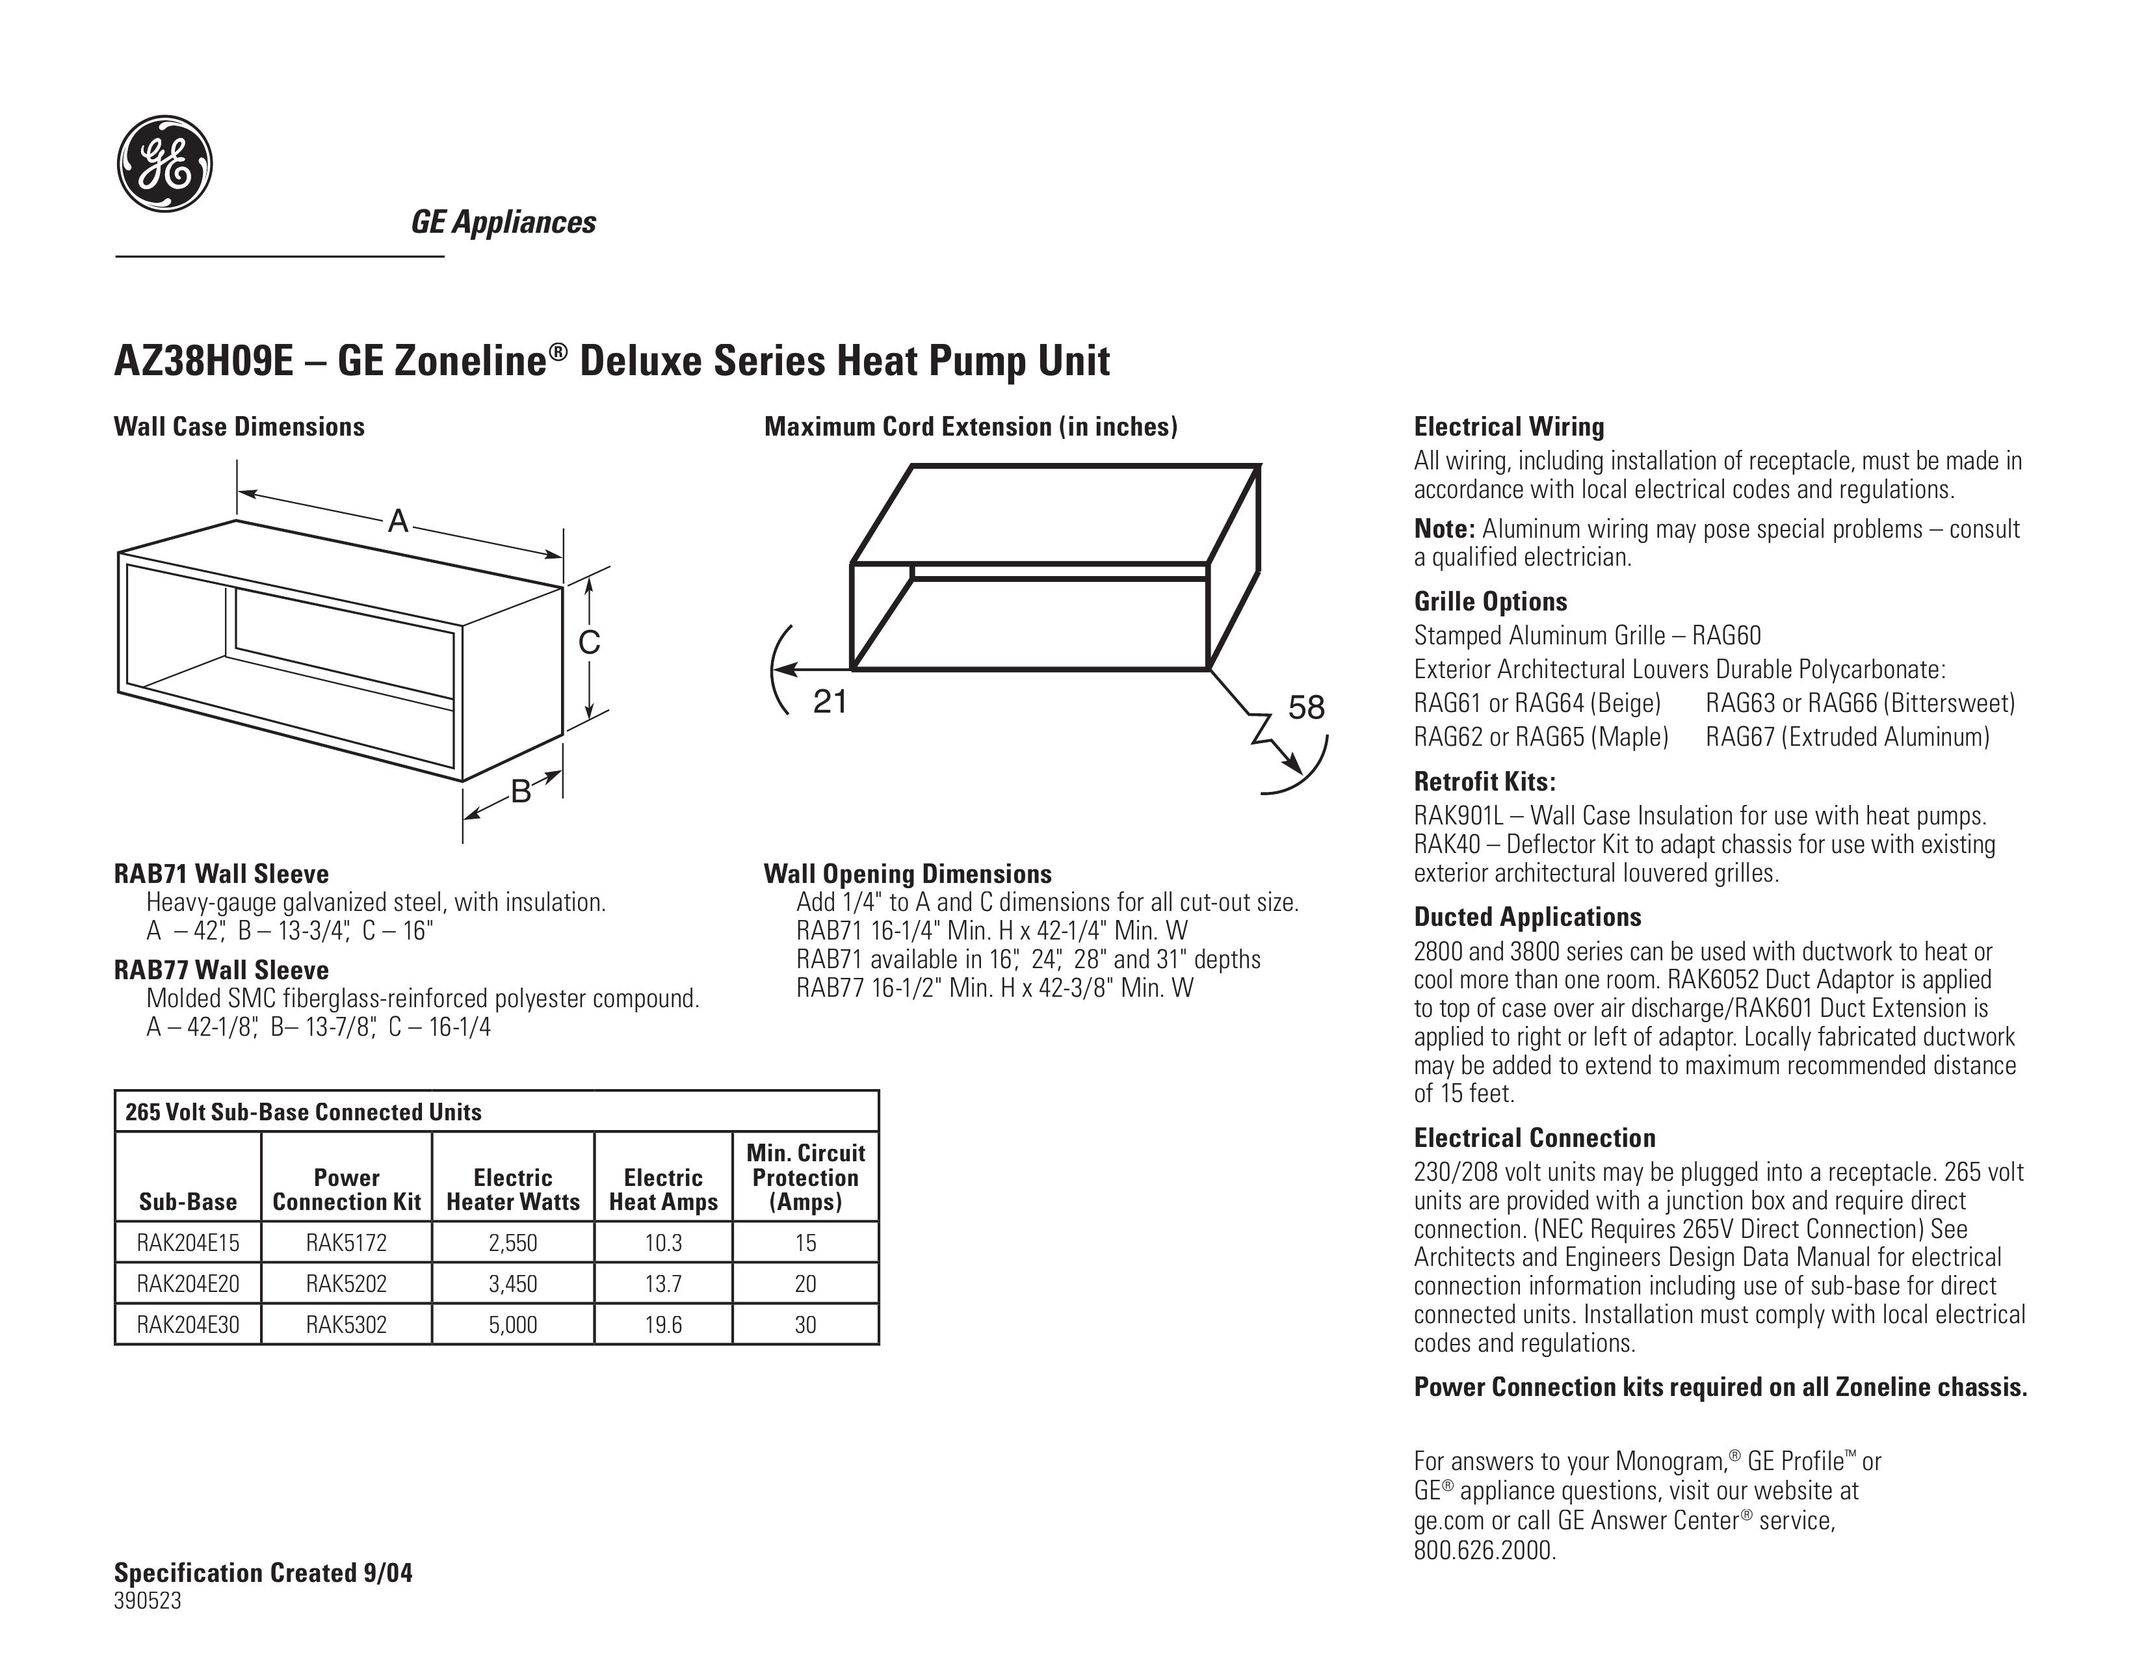 GE AZ38H09E Heat Pump User Manual